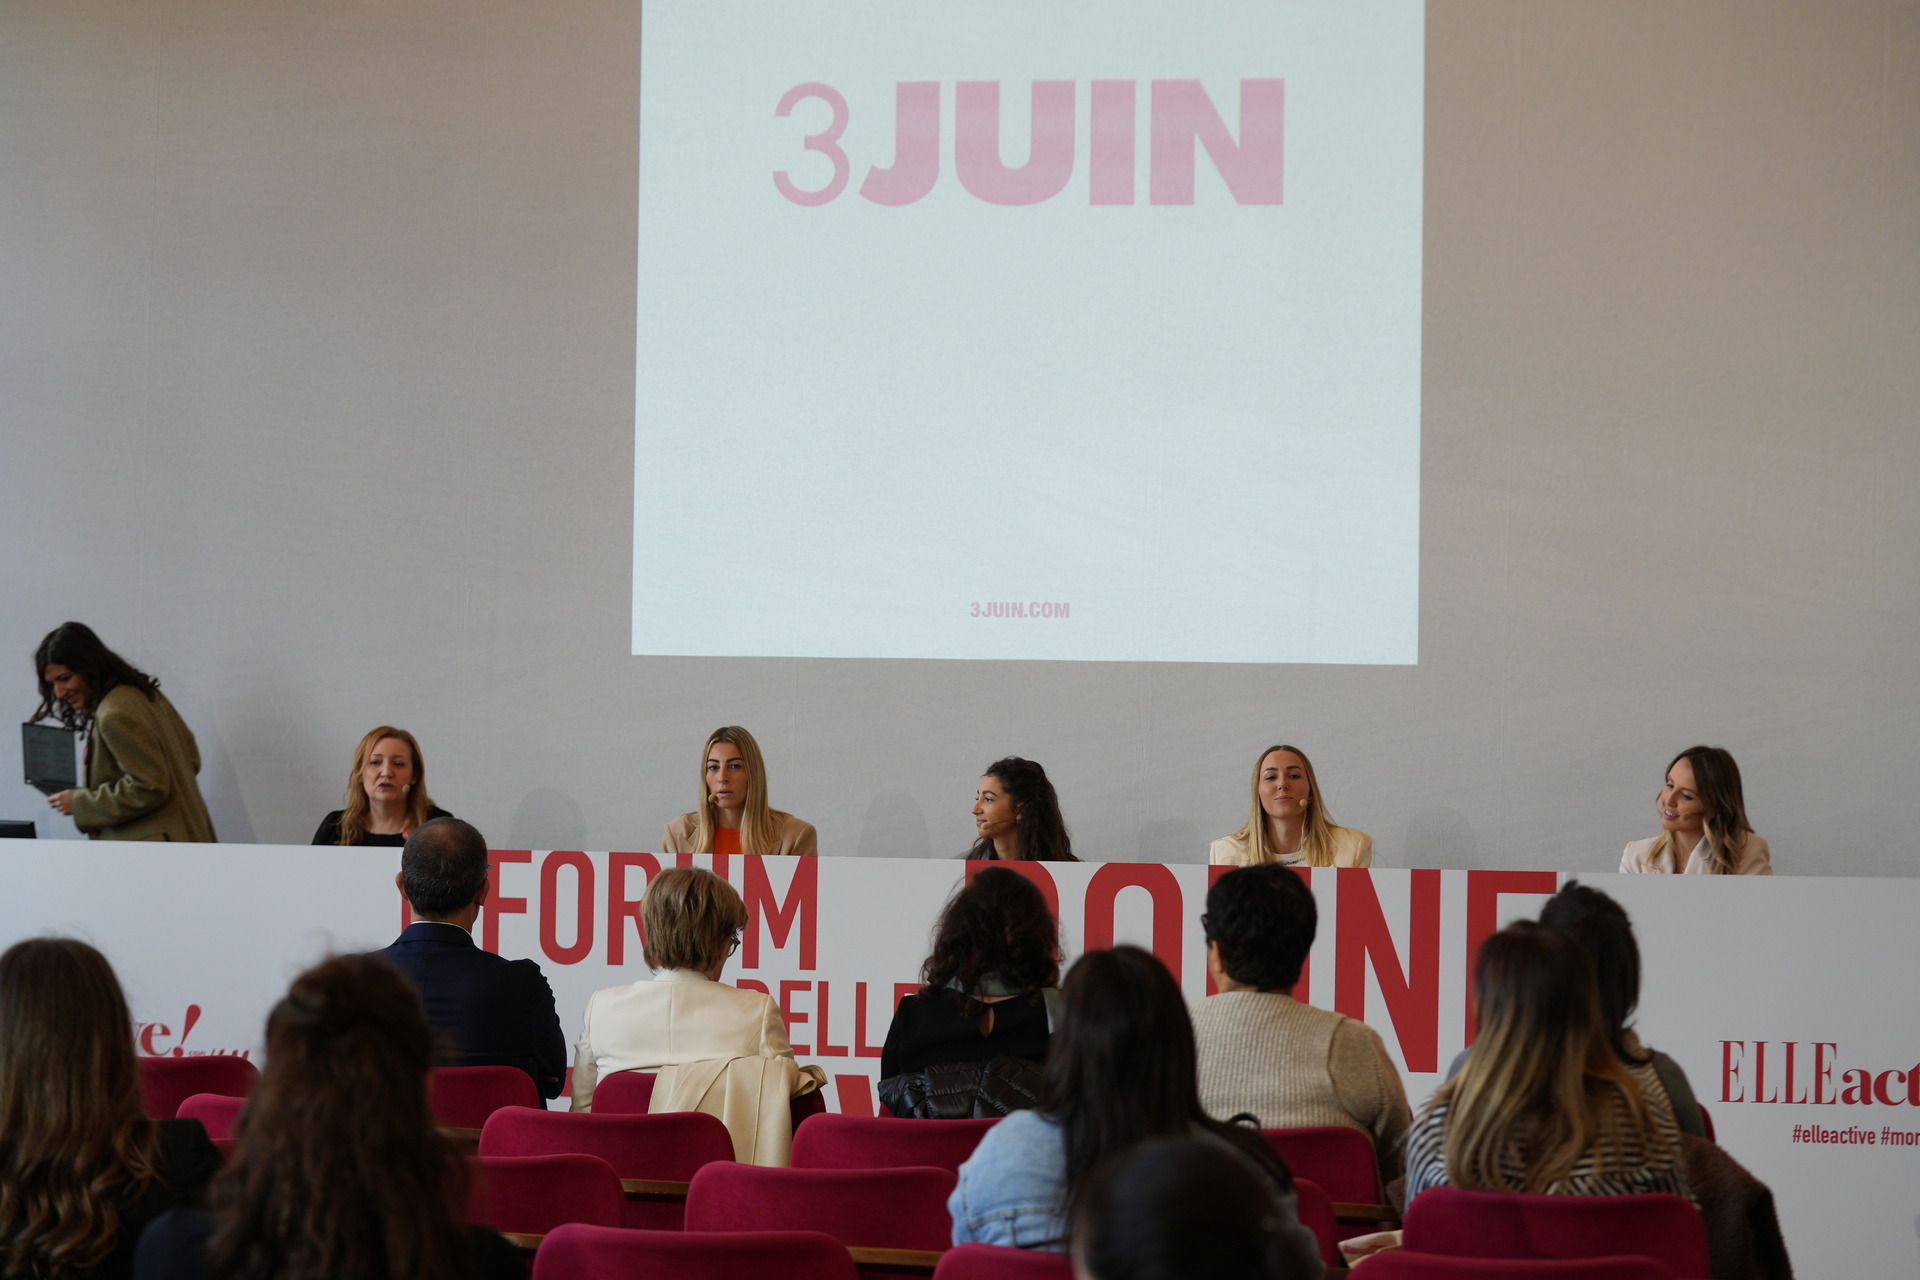 3JUIN'den Perla, Antonia ve Margherita Alessandri, Hearst Digital CEO'su Simona Zanette ile “Elle active!”de röportaj yaptı.